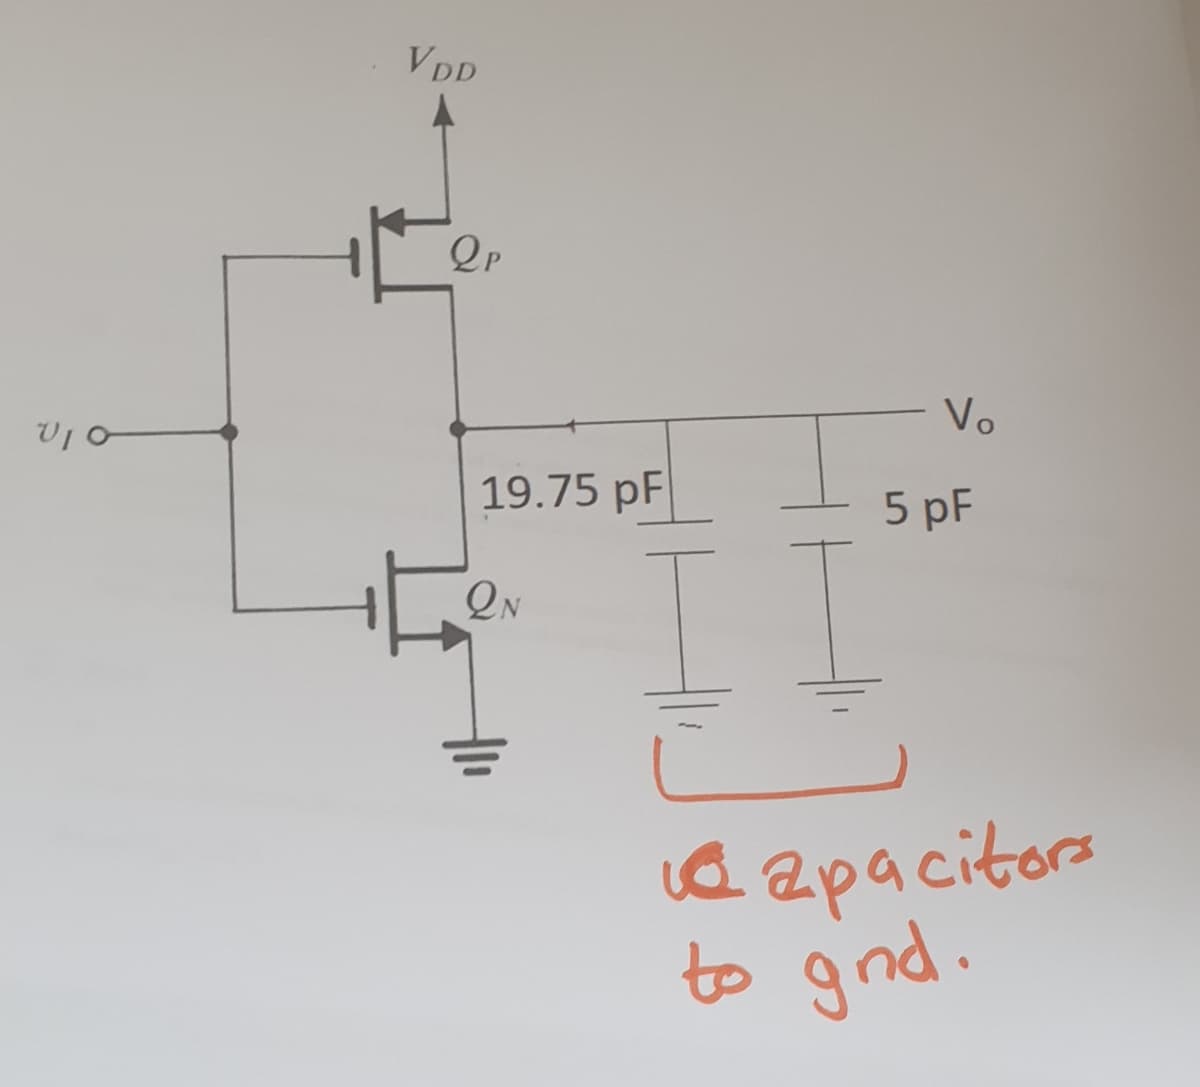 VIO
VDD
QP
19.75 pF
2N
Vo
5 pF
capacitors
to gind.